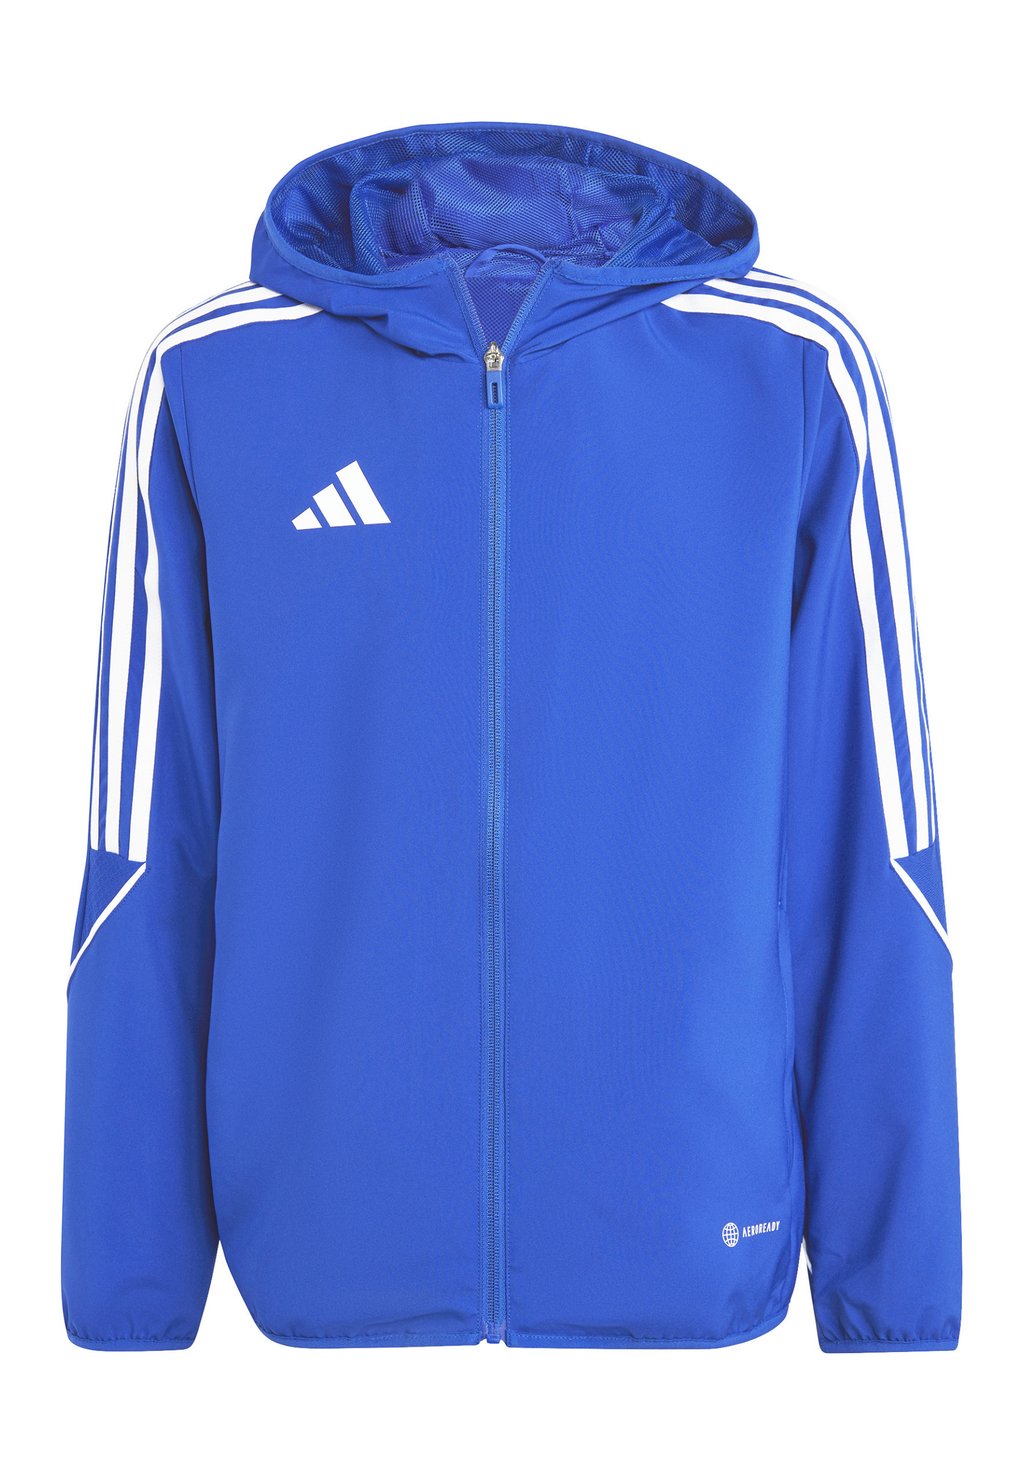 Спортивная куртка Tiro 23 League Adidas, цвет blauweiss спортивная куртка tiro 23 league adidas цвет gelb